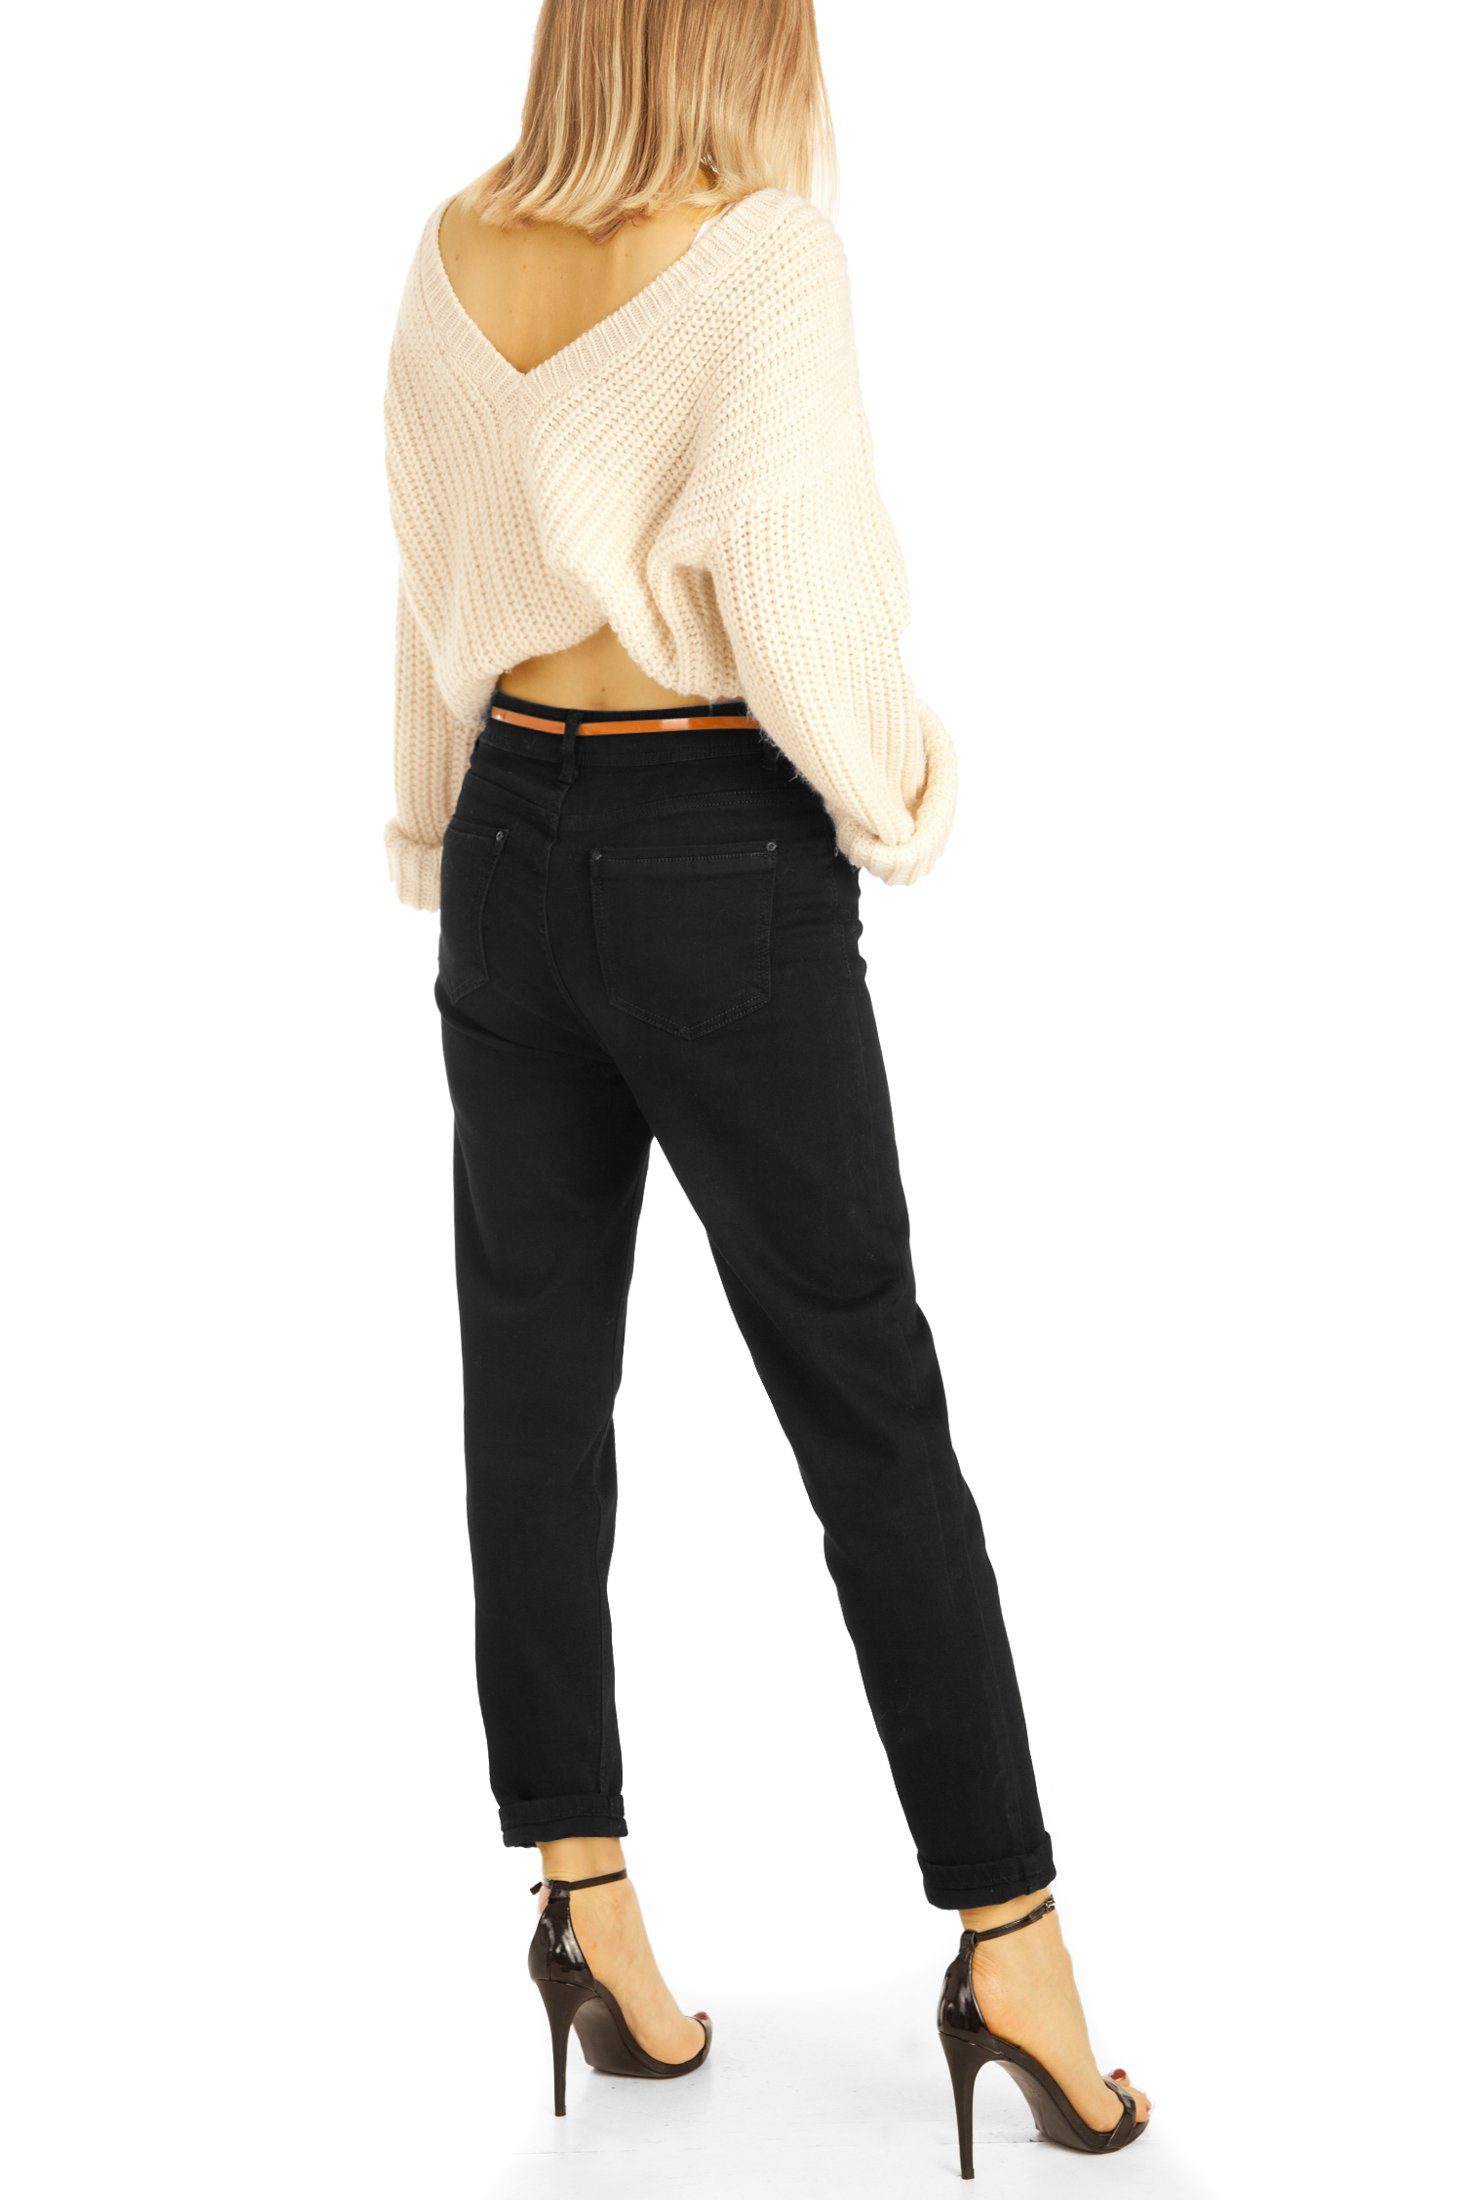 j13k-3 Stretch-Anteil, Mom High-waist, - Jeans 5-Pocket-Style, - Schwarze Mom-Fit Hose High-waist-Jeans Waist High Damen styled be Jeans, mit